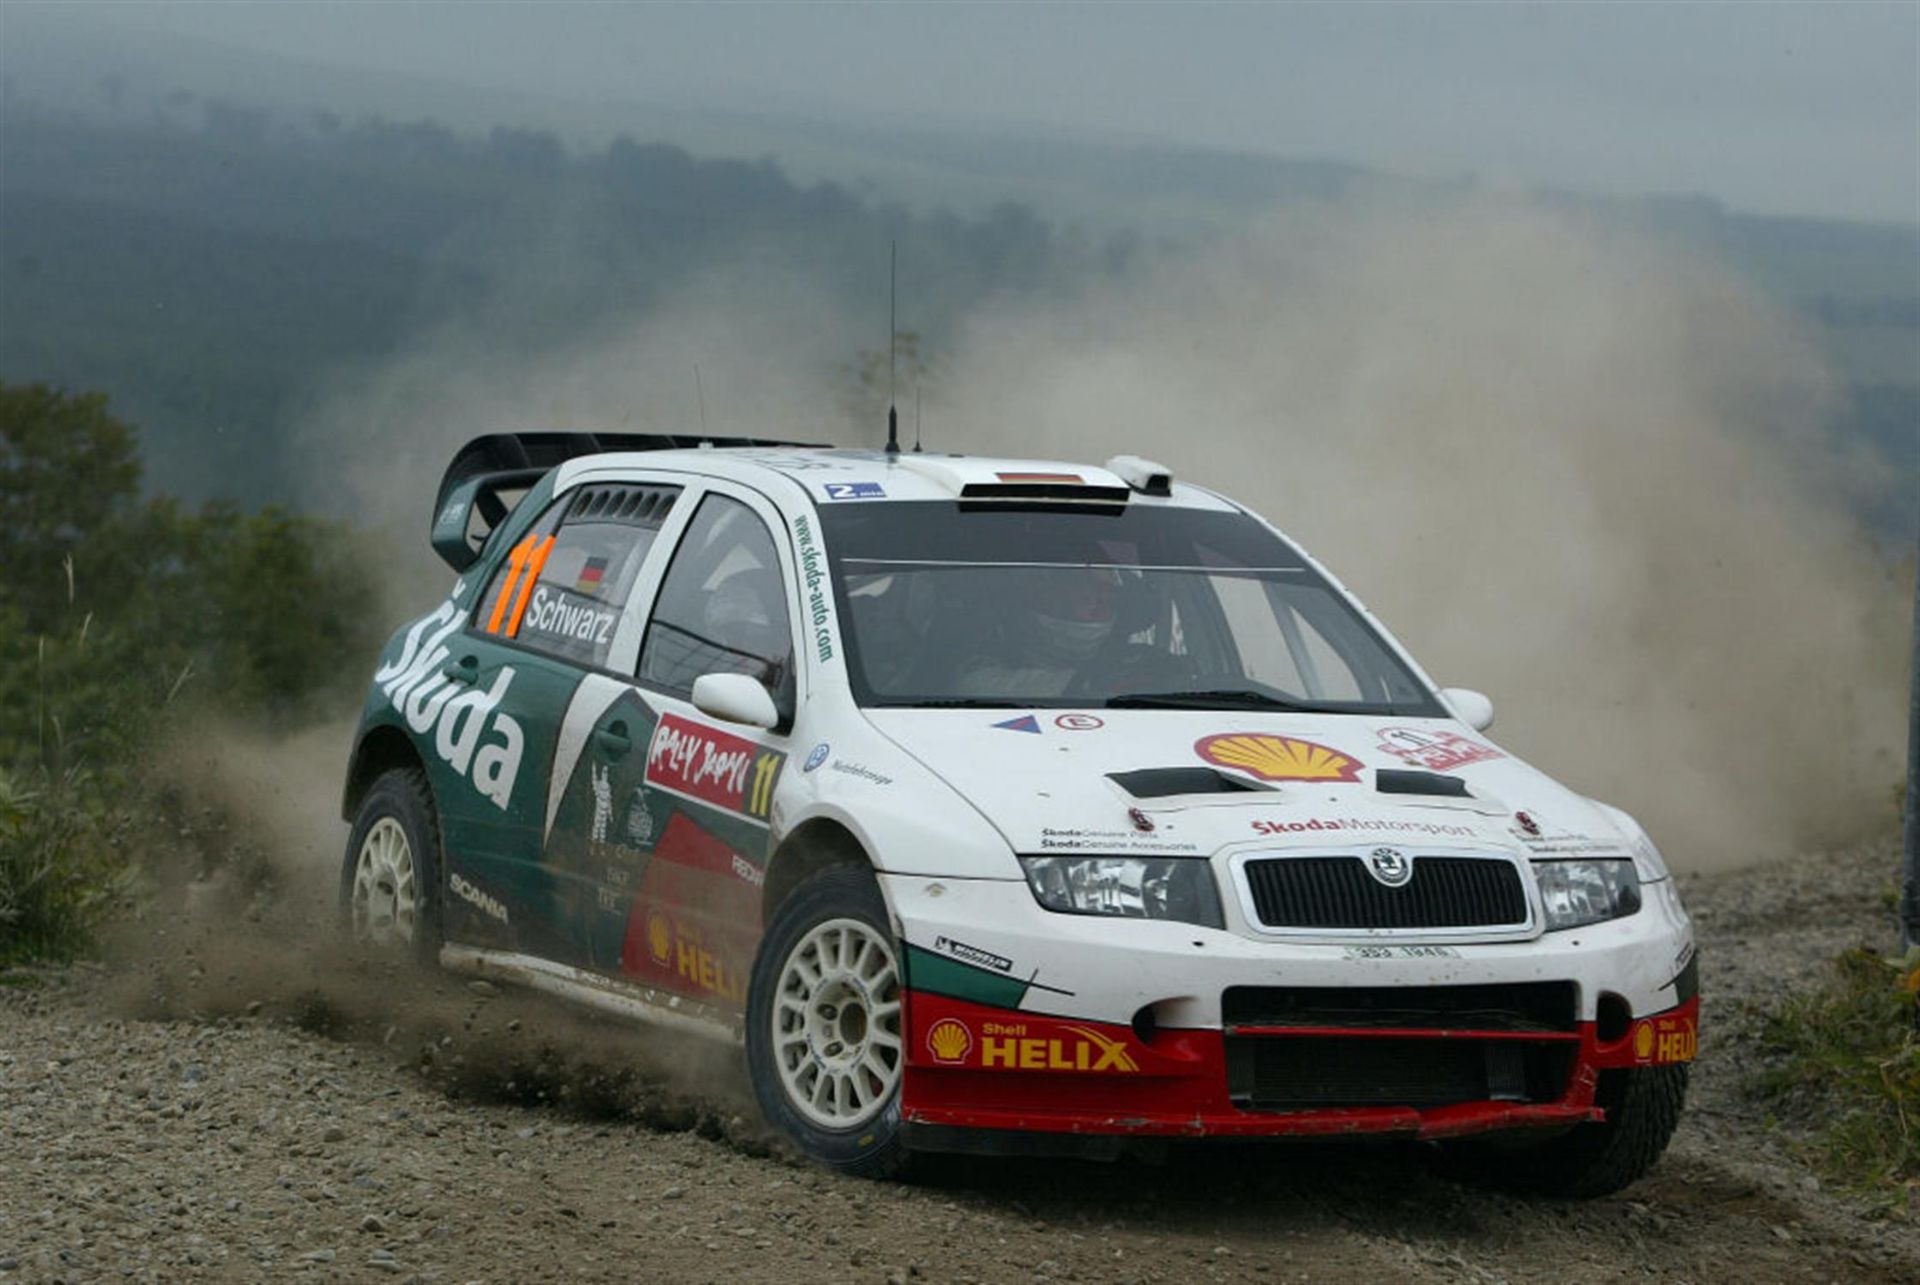 2003 Škoda Fabia WRC - Image 9 of 10